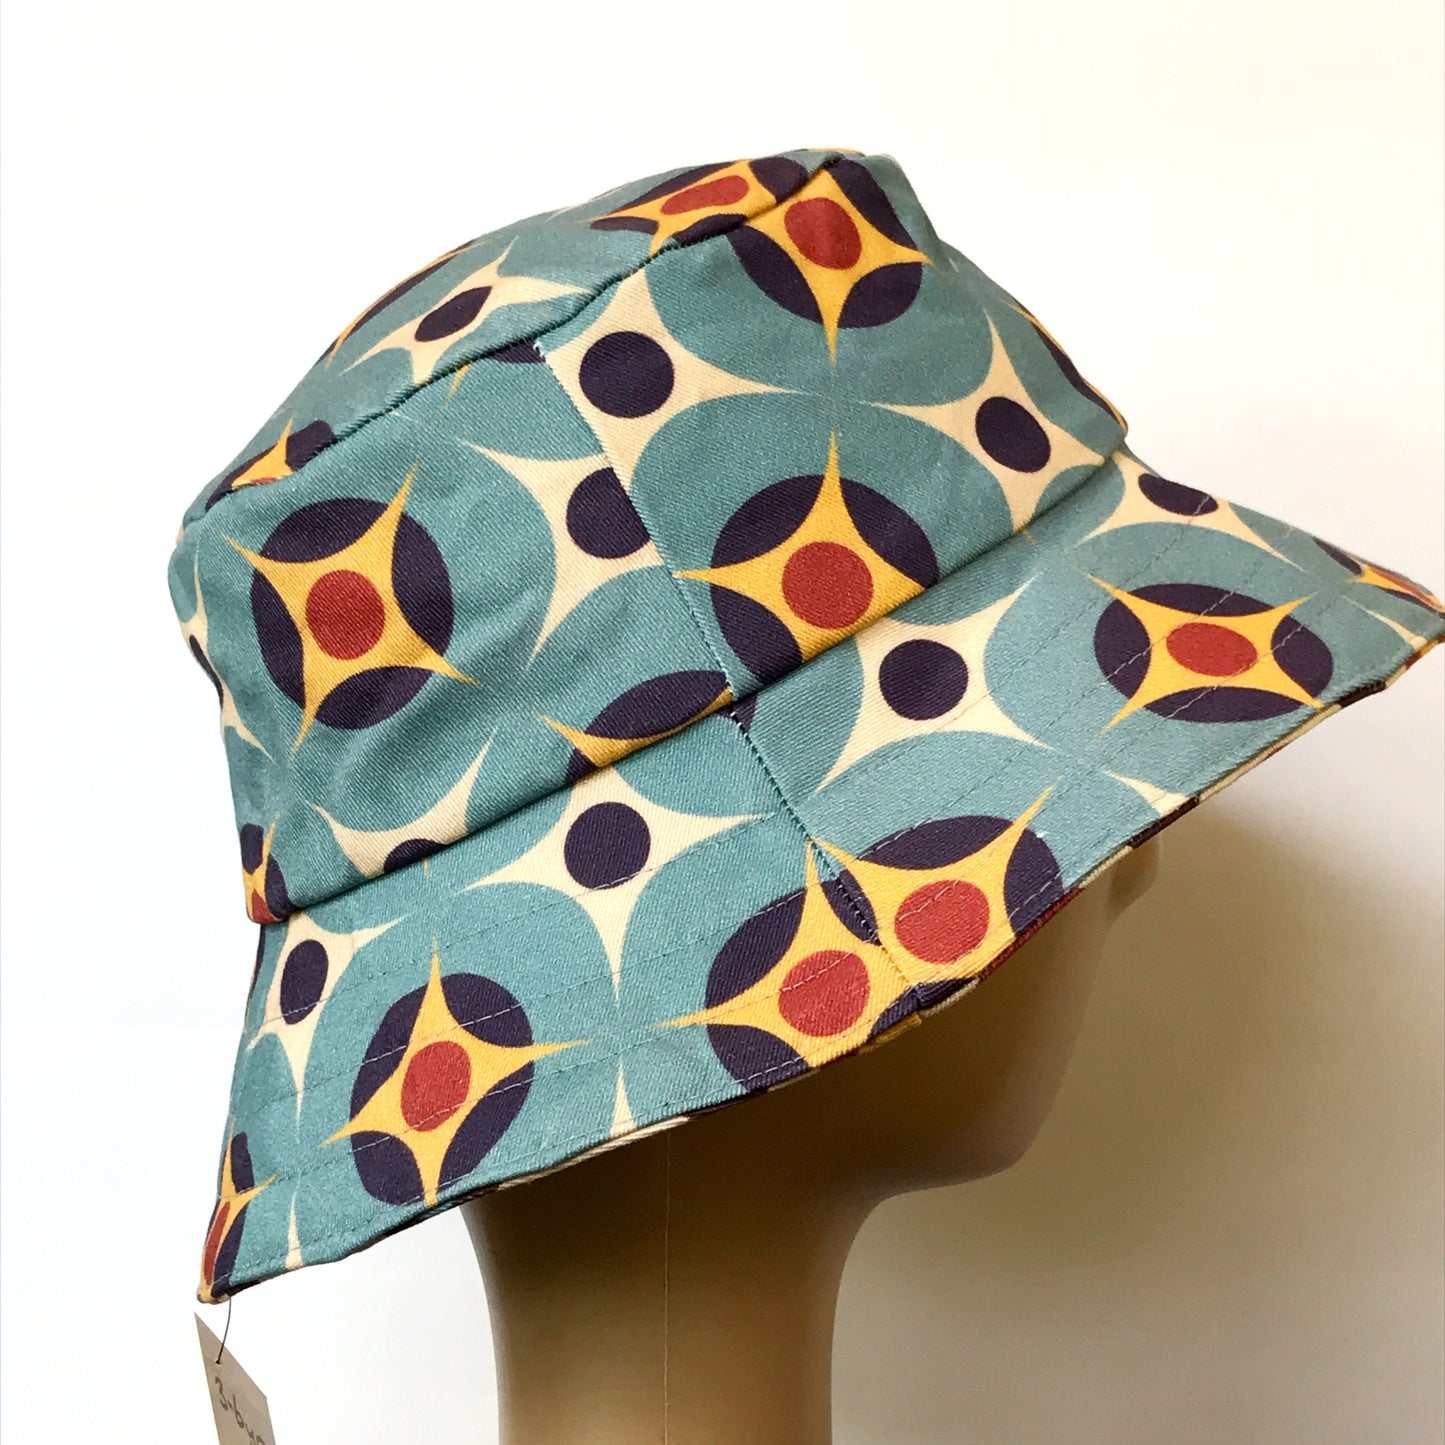 Reversible Bucket Hat - sizes 3 mths - 6 yrs, retro geometric print